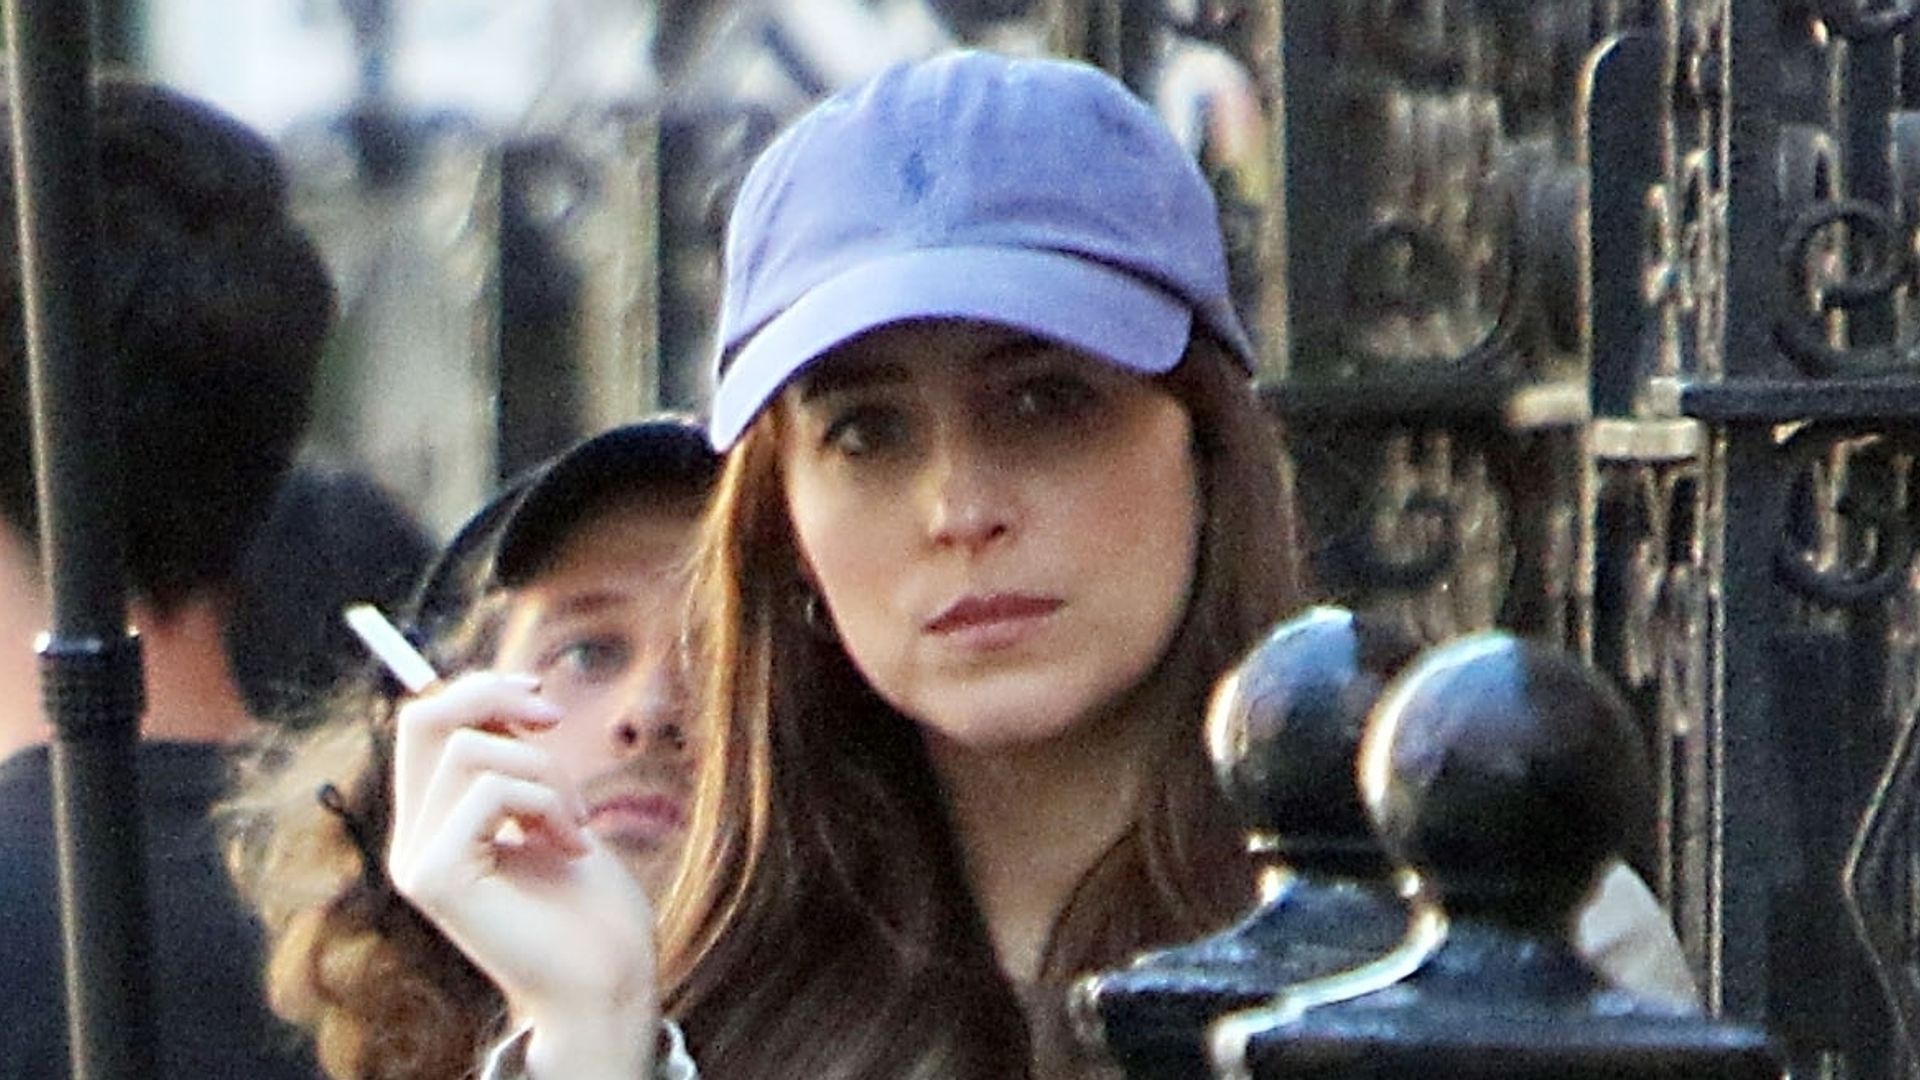 Dakota Johnson is seen on location in West Village, New York, working on her latest film, Materialists.

